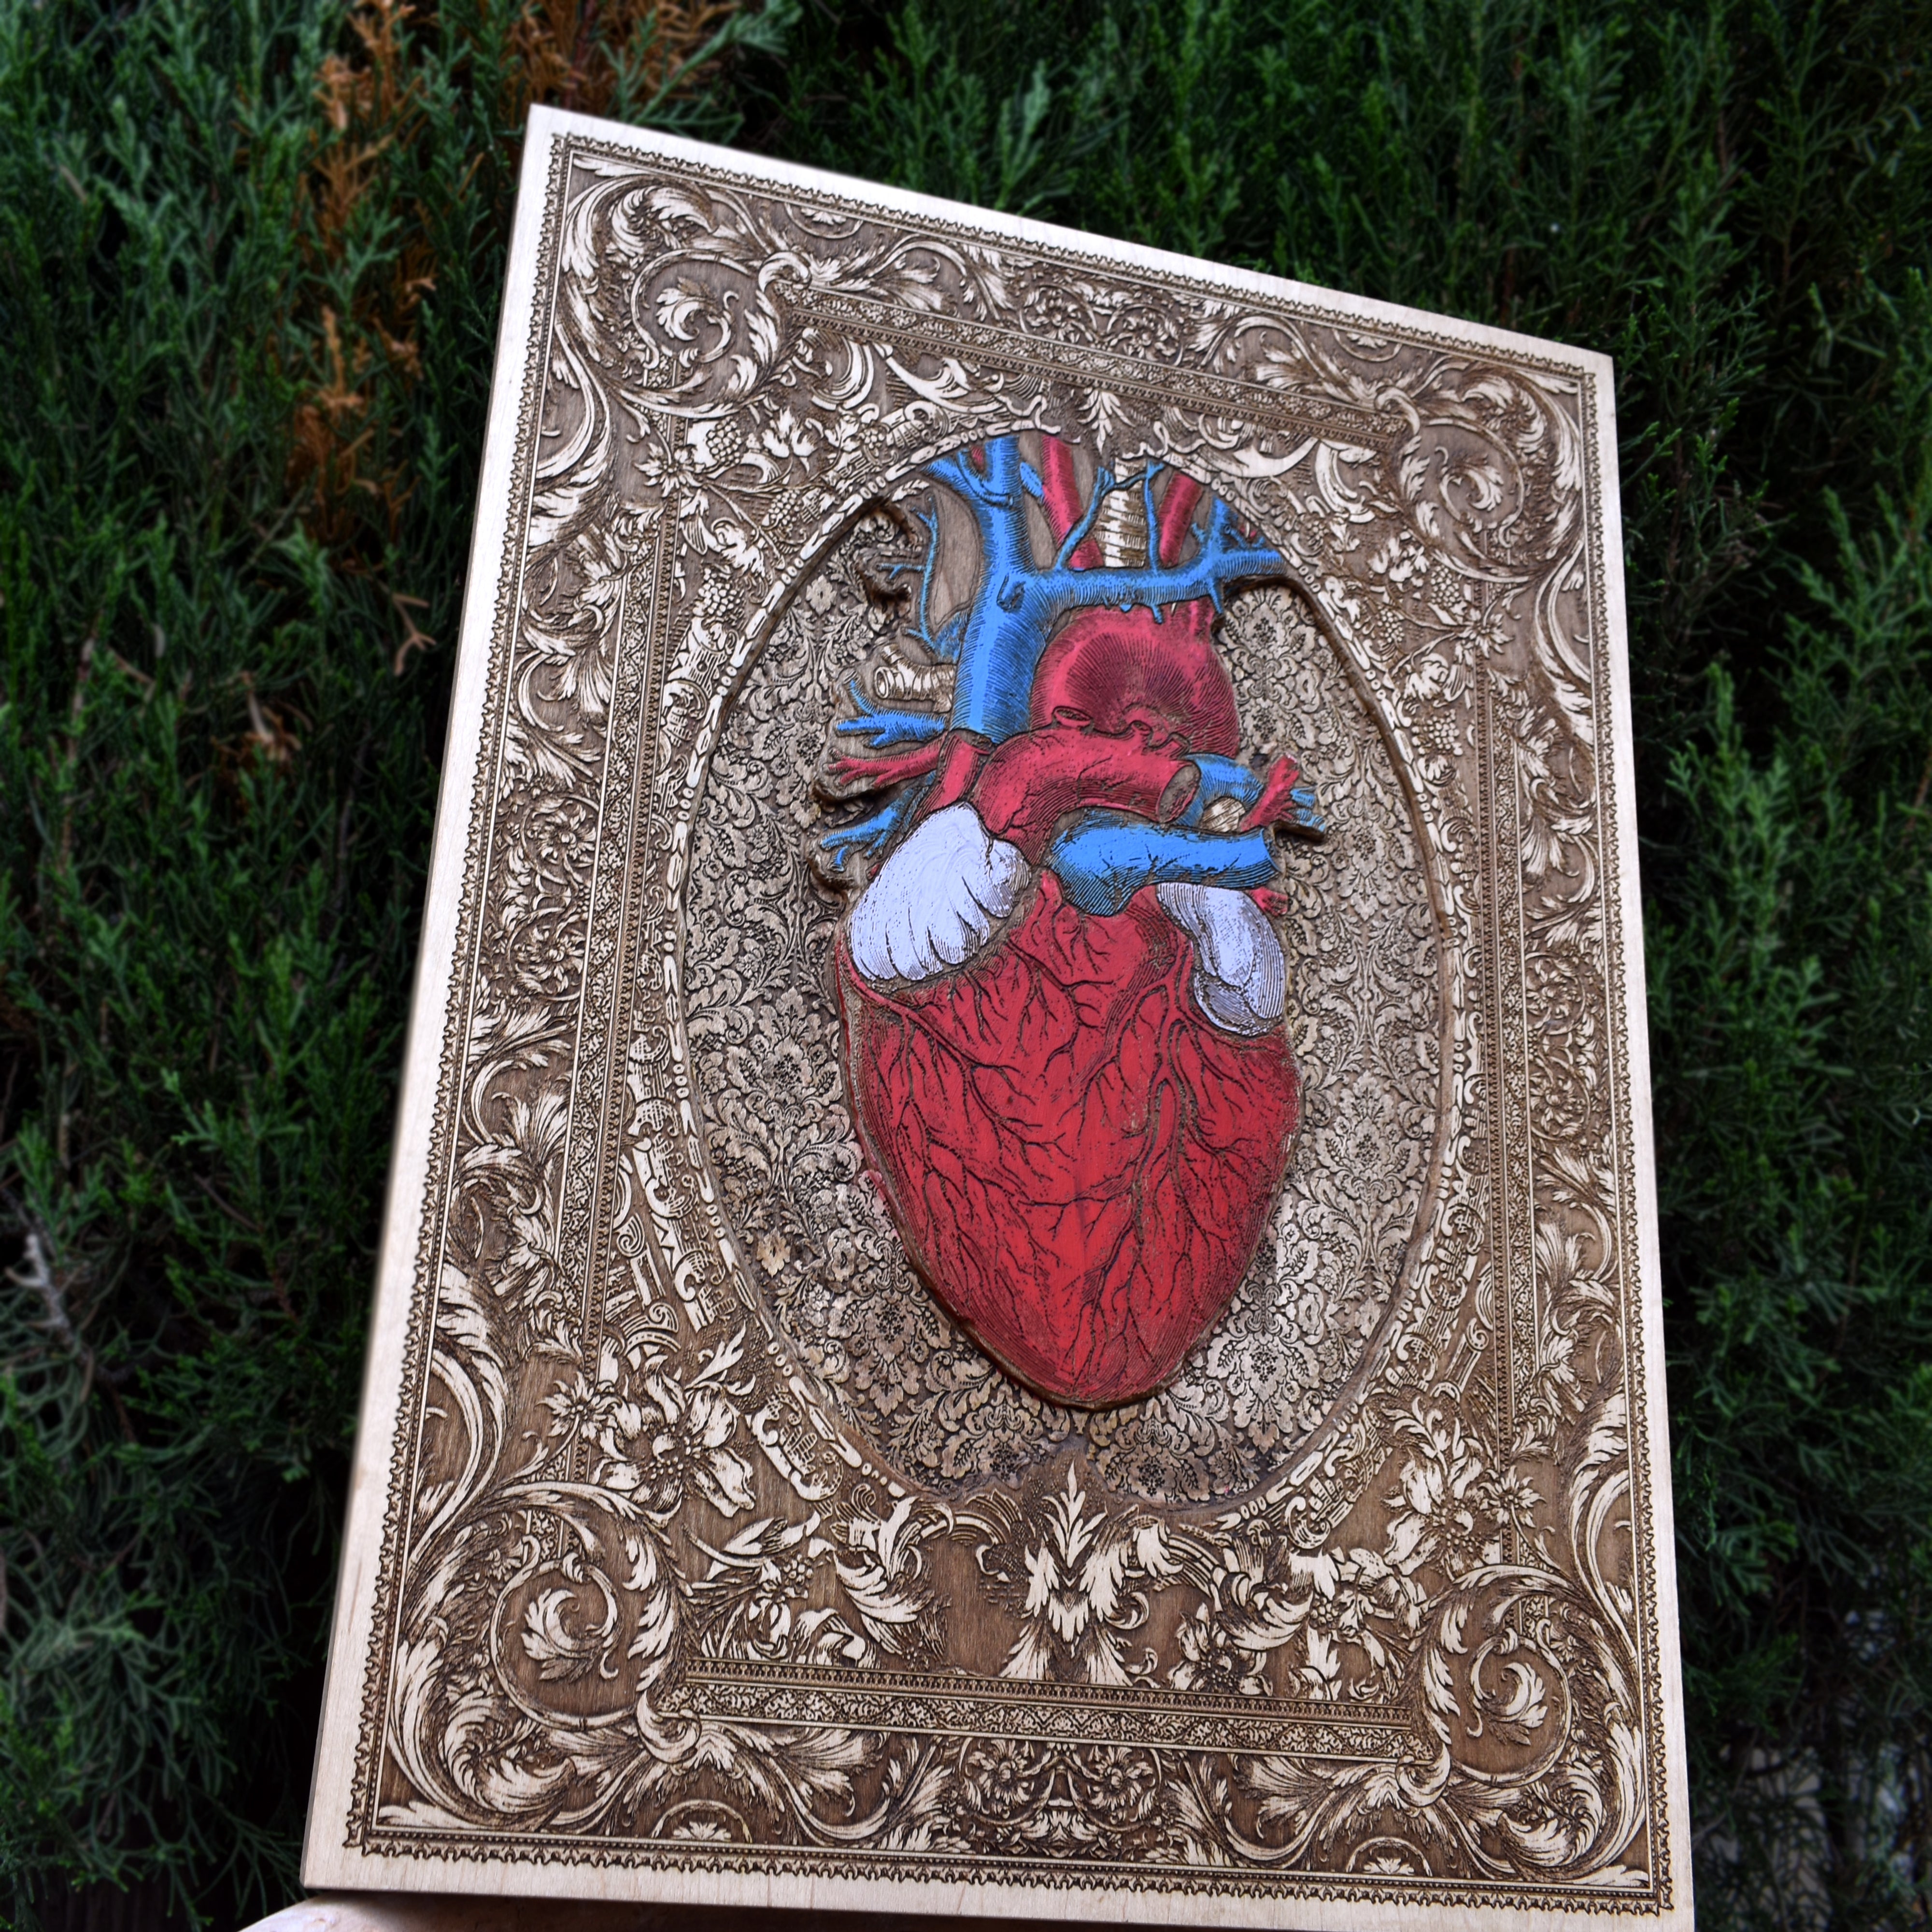 Heart Artwork Hand Carved- Large